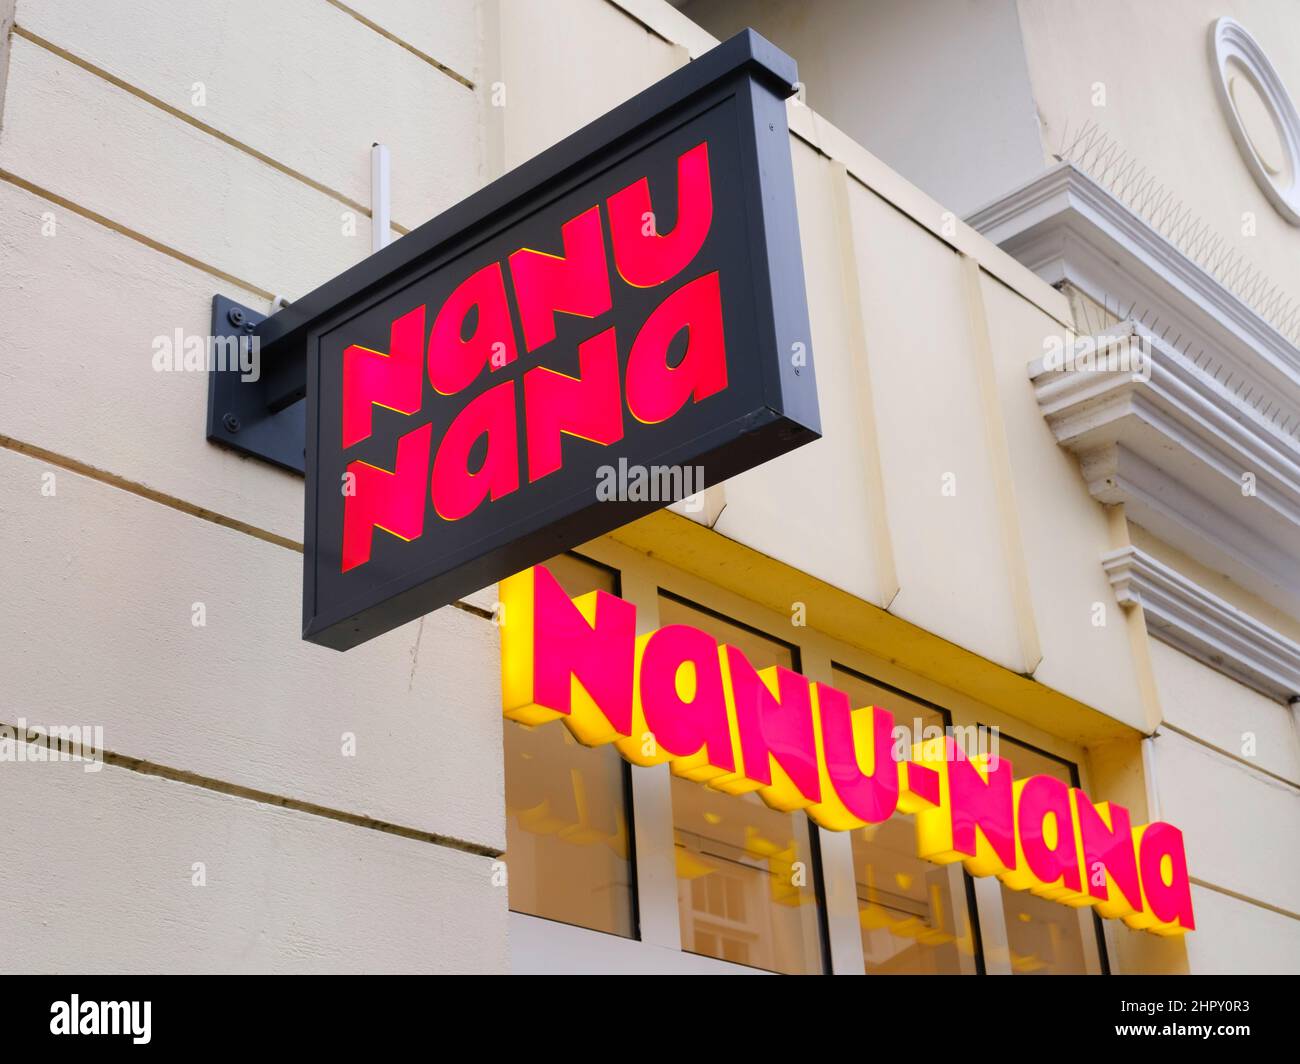 Sign And Logo Of Deco-shop Nanu-Nana Stock Photo